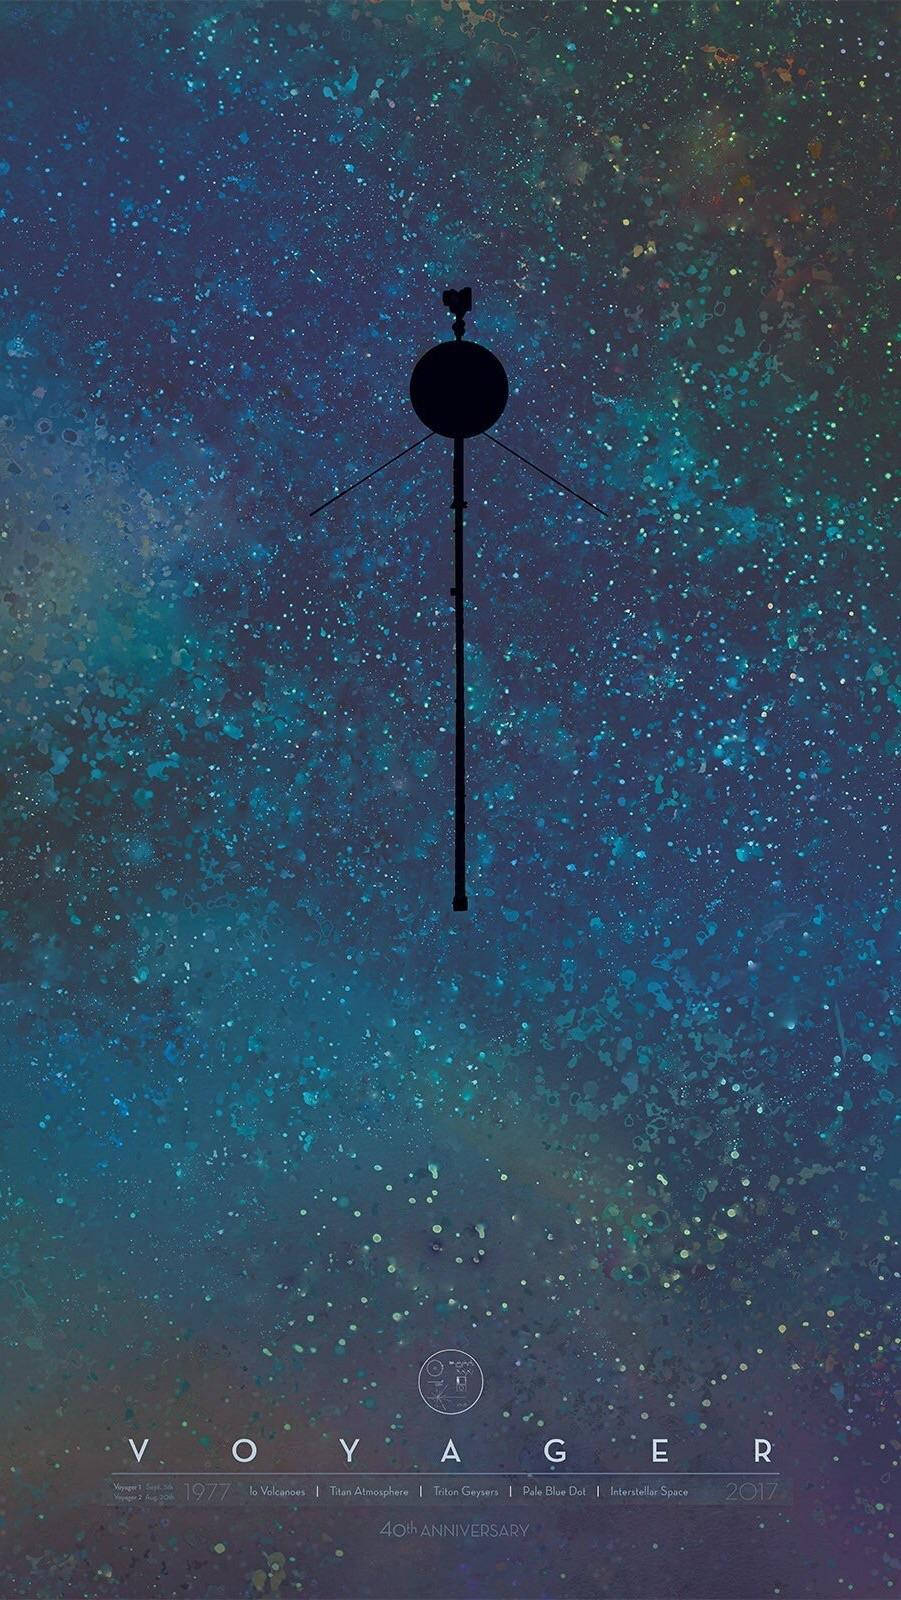 Nasaiphone Voyager 40-årsjubileum. Wallpaper